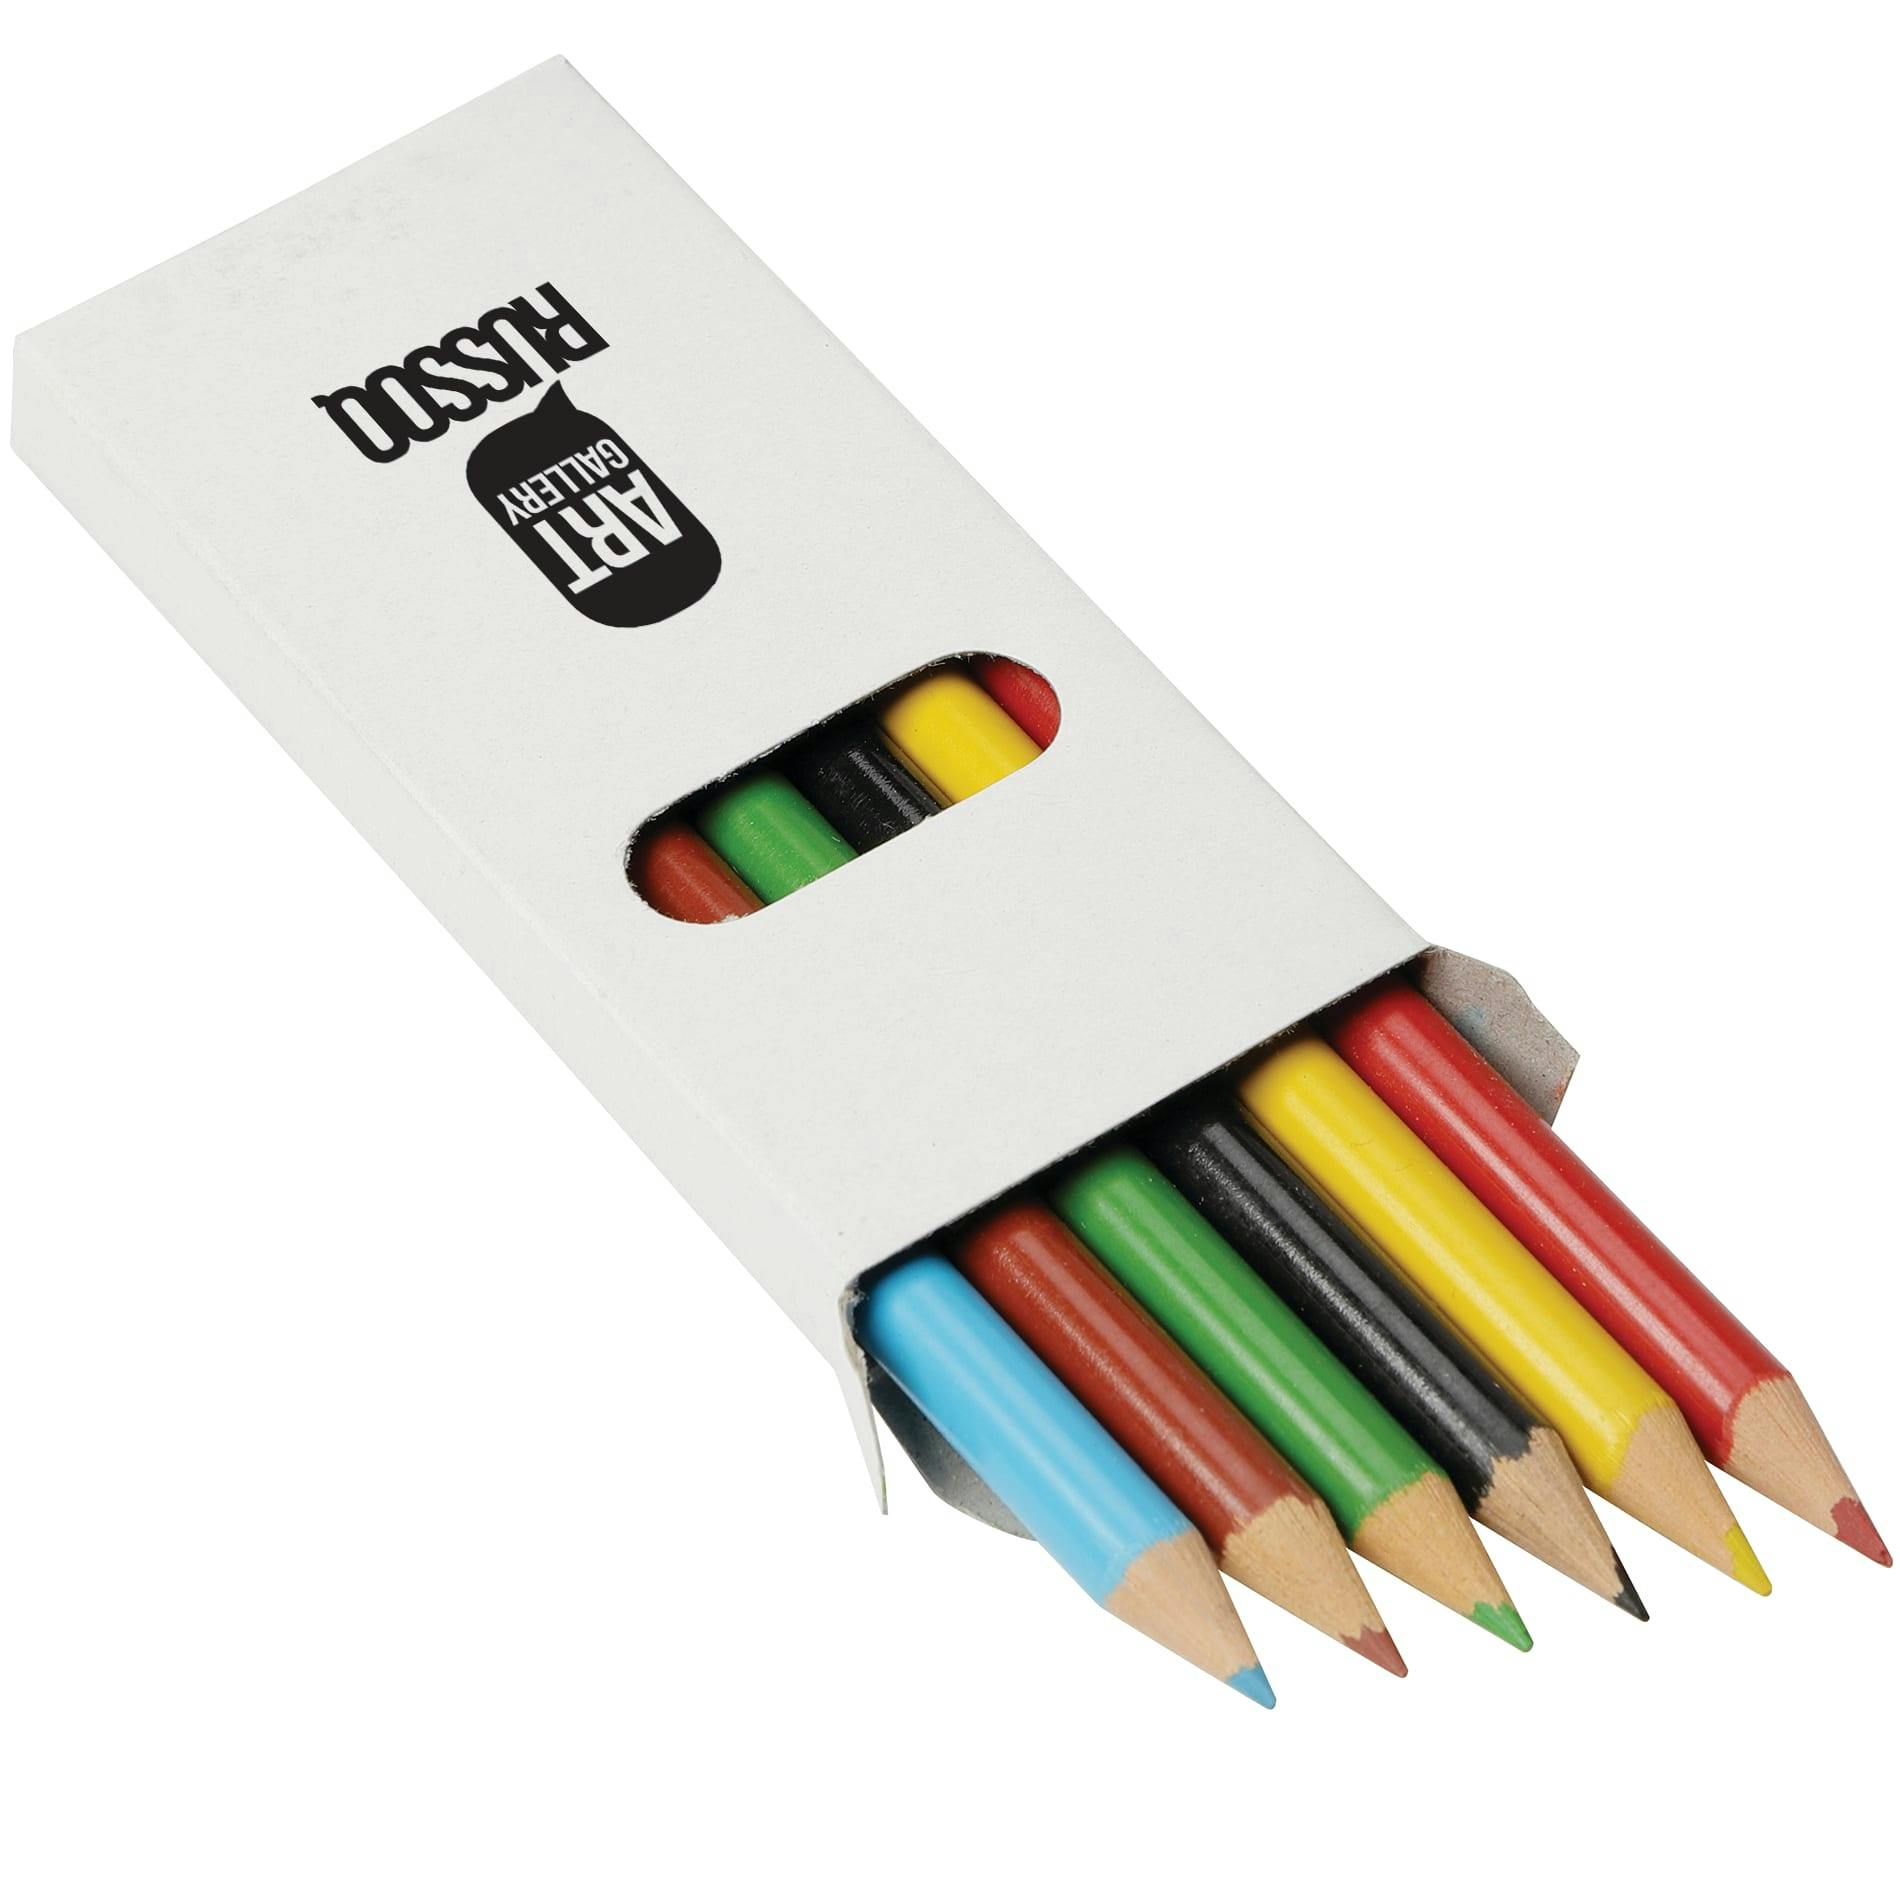 Sketchi 6-Piece Colored Pencil Set - additional Image 4